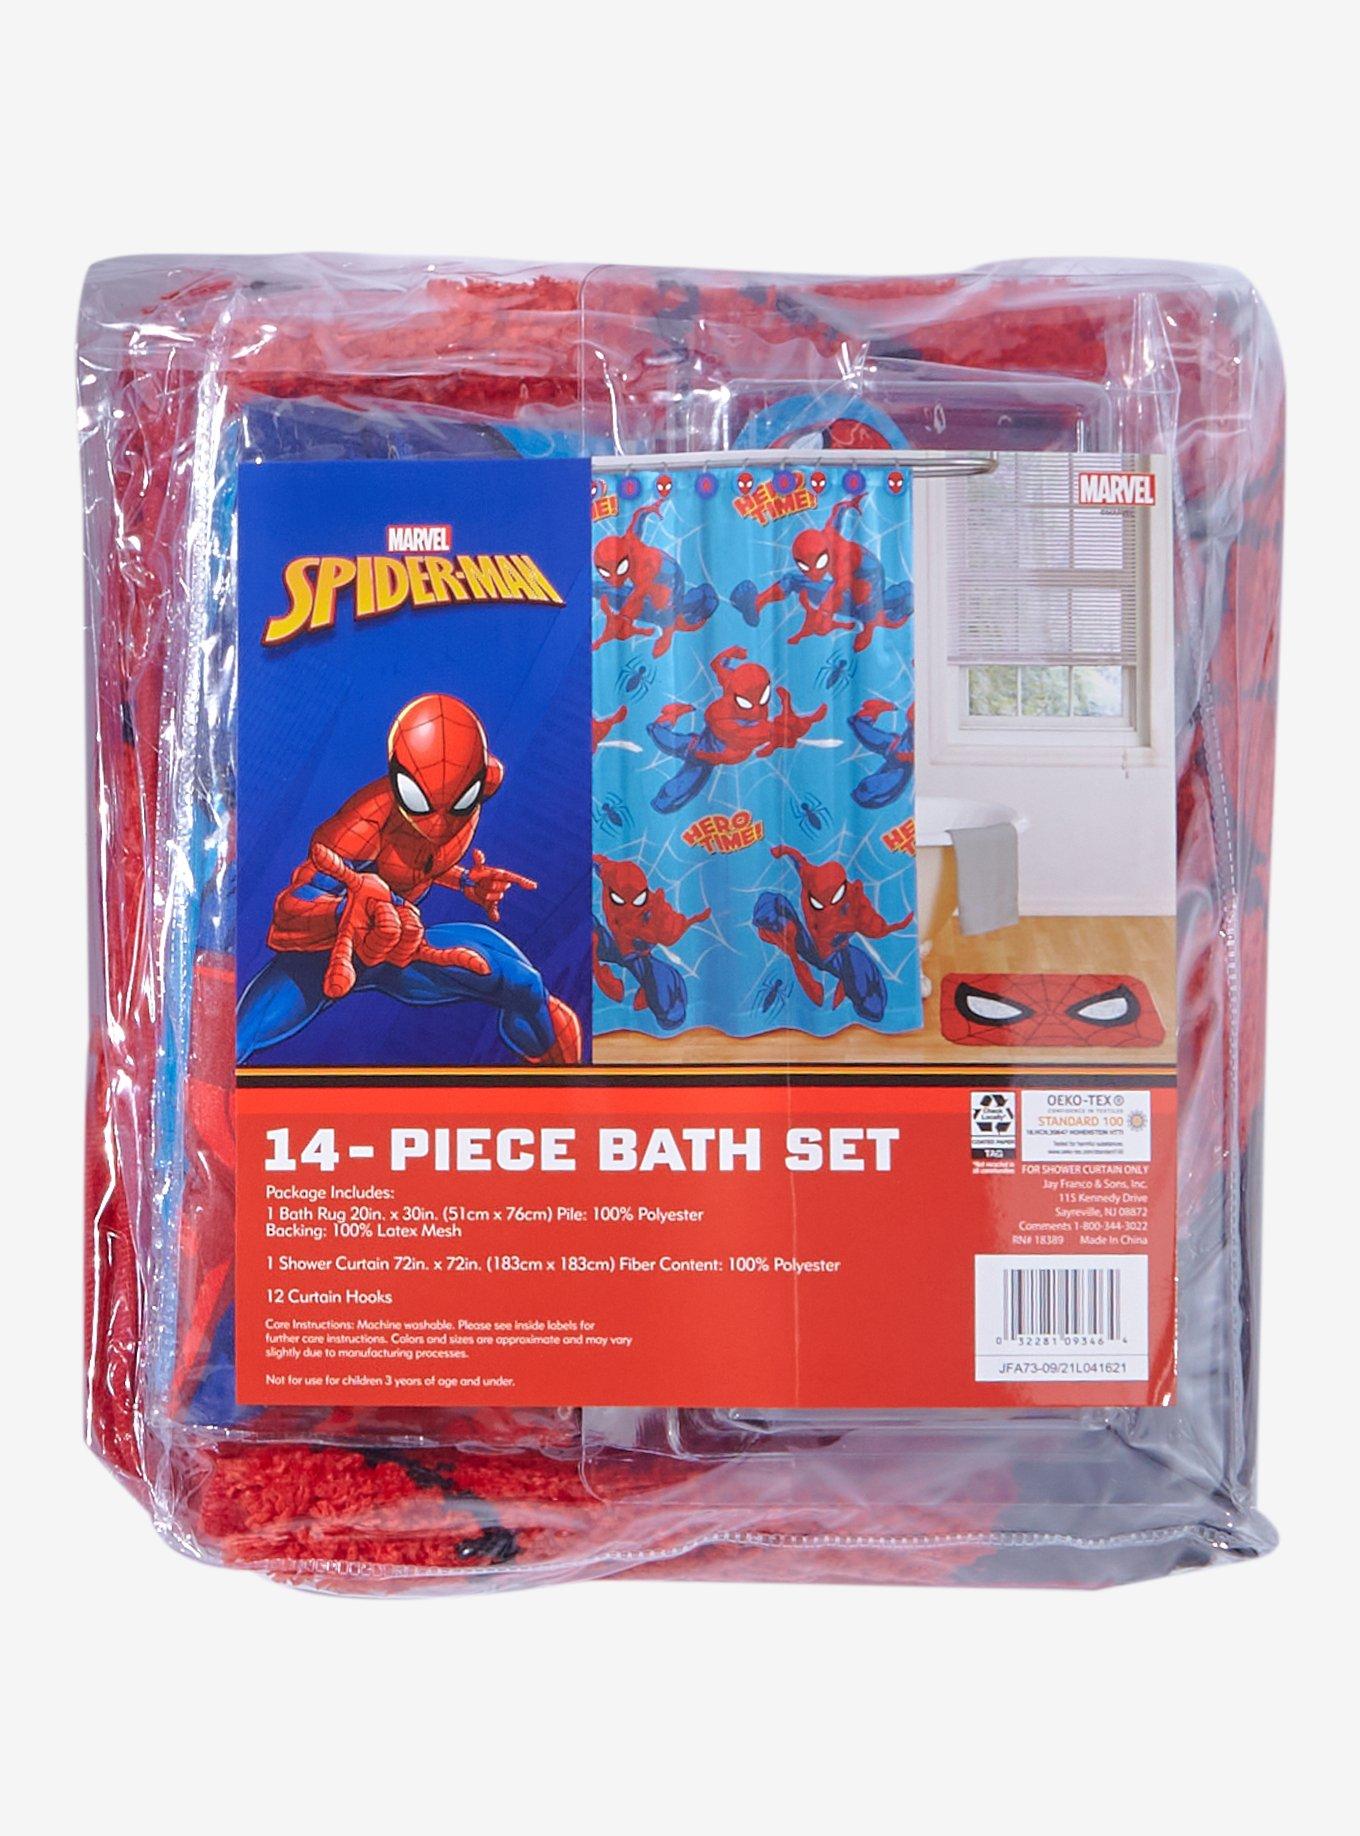 Spiderman 14 Piece Carpenter Playset - Tool set